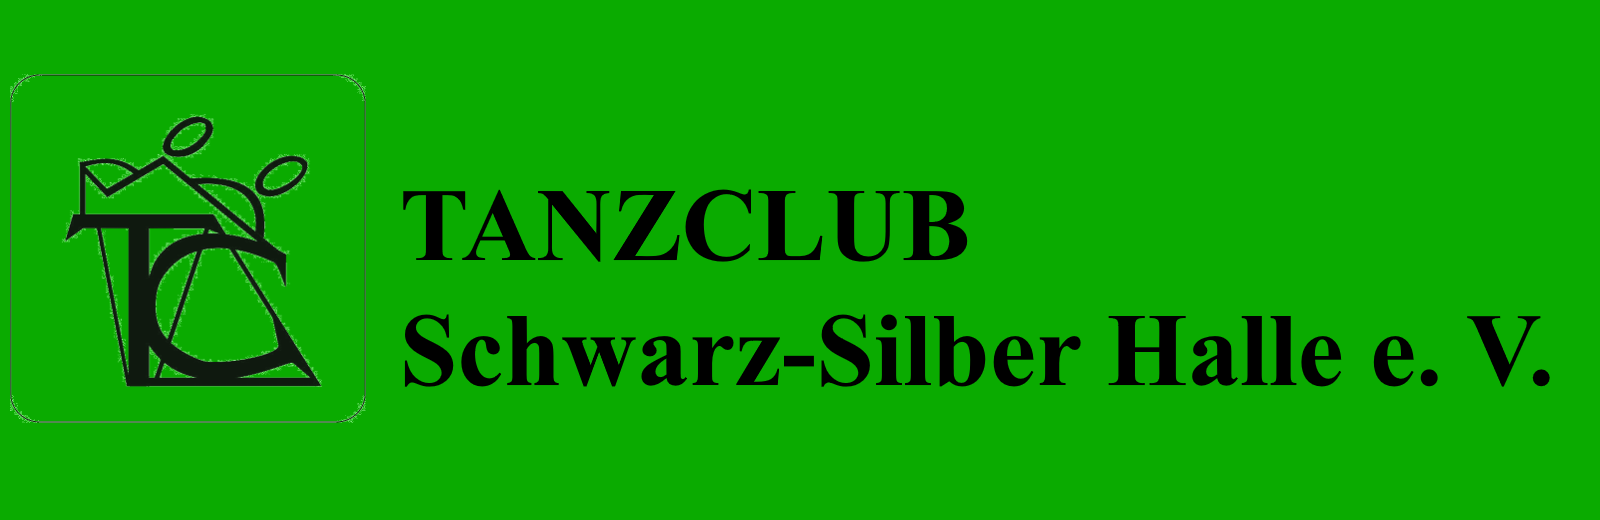 Tanzclub Schwarz-Silber Halle e.V.